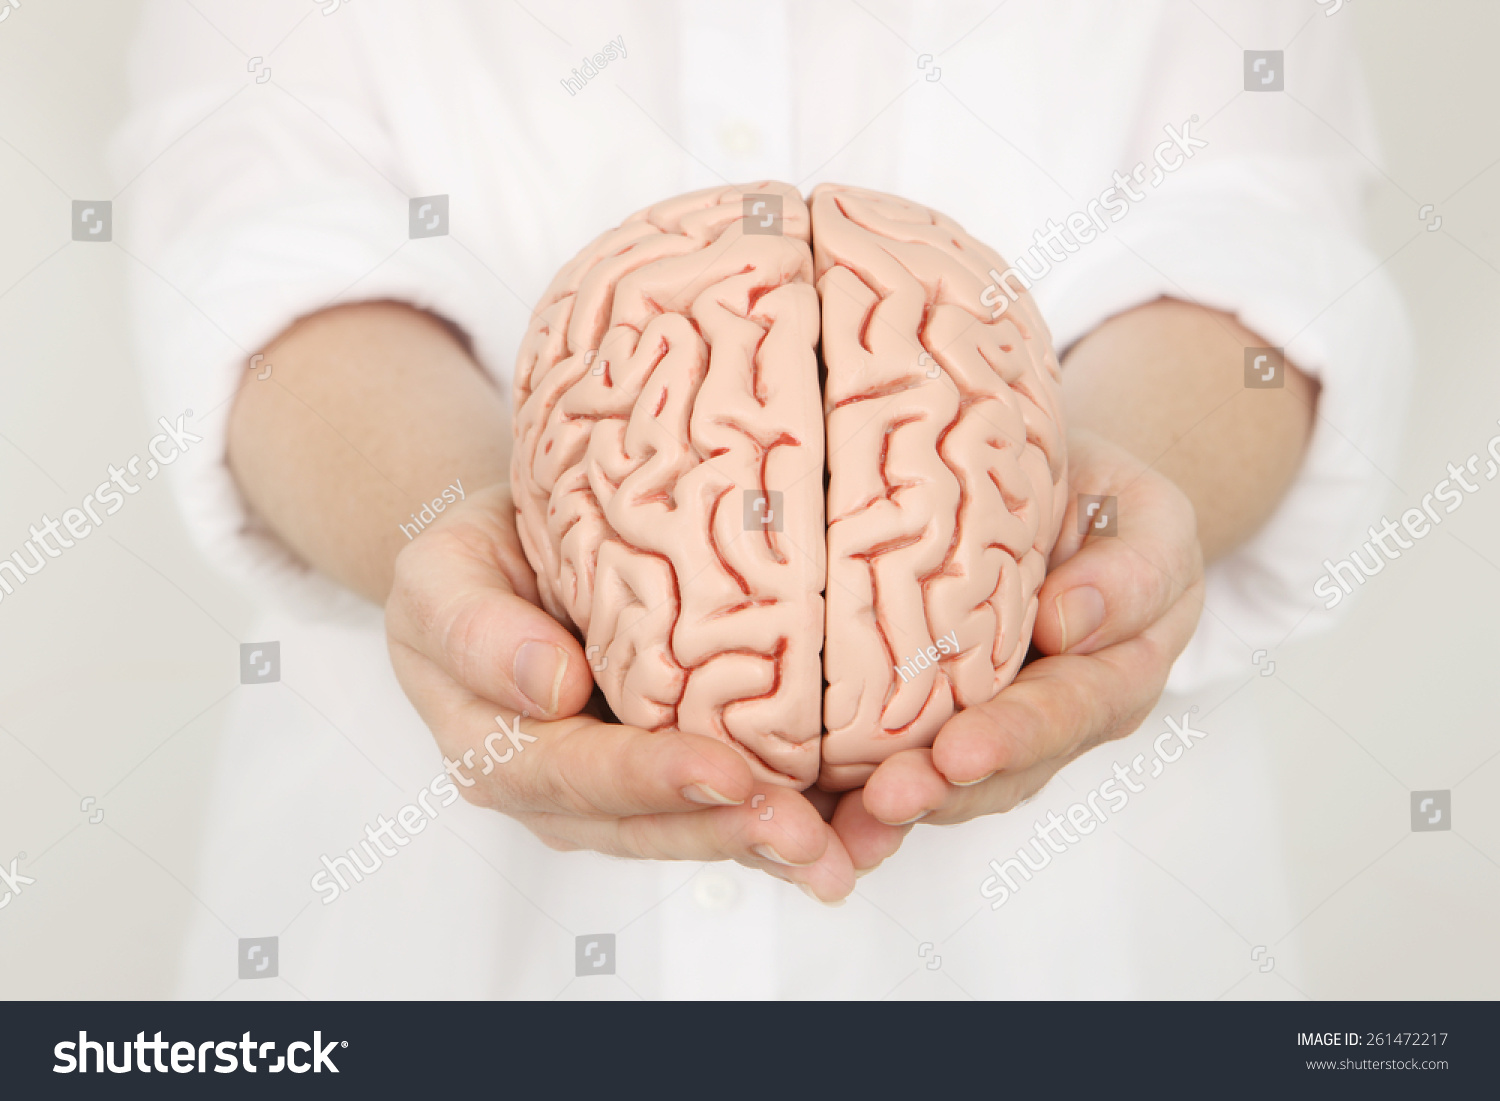 Brain Model in hands #261472217